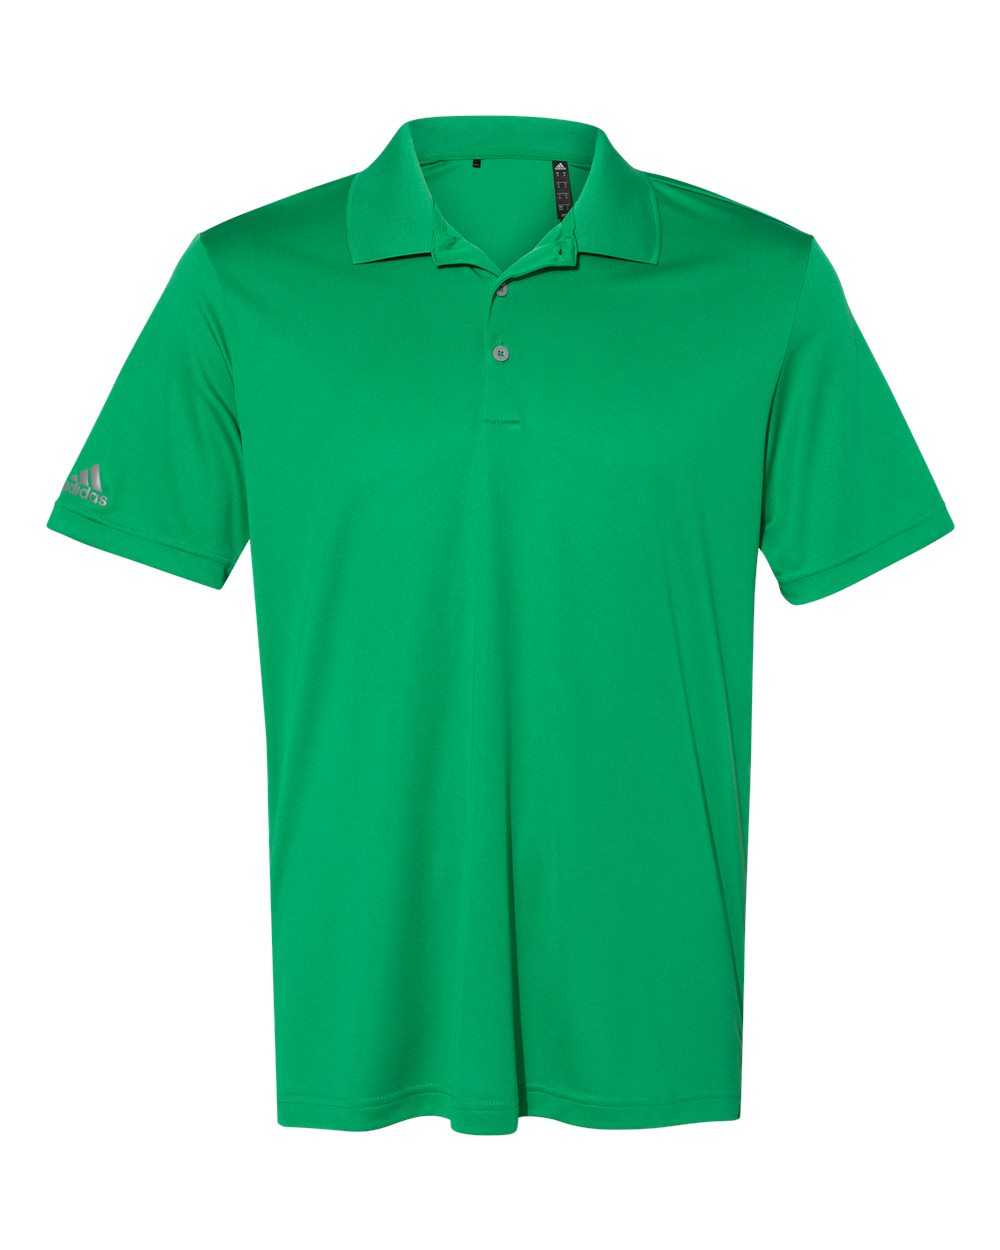 Adidas A230 Performance Sport Shirt - Green - HIT a Double